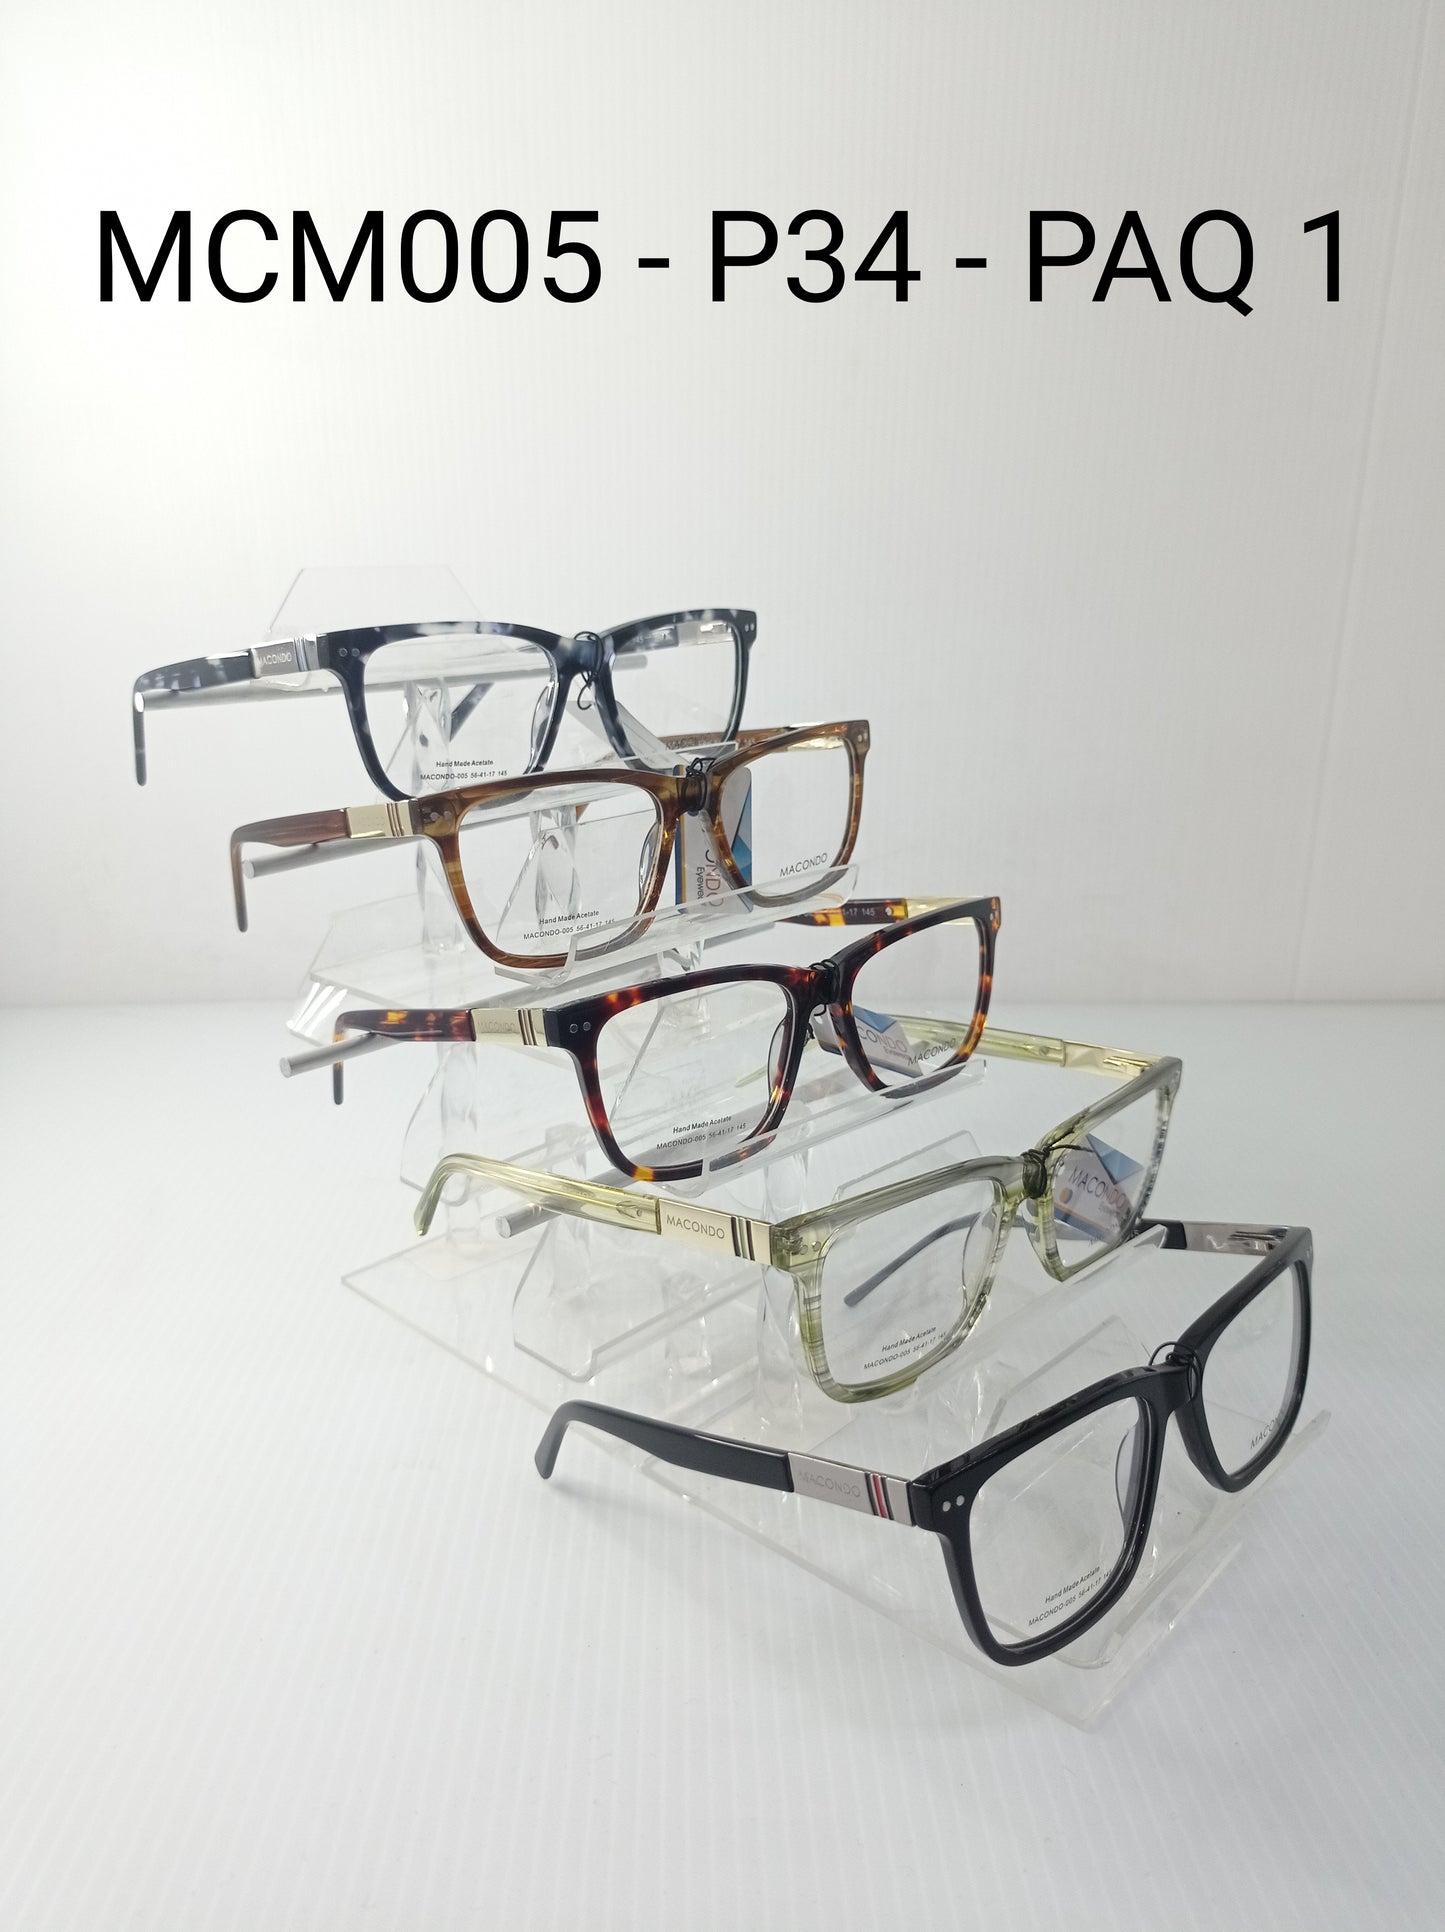 MACONDO - MCM005 - P34